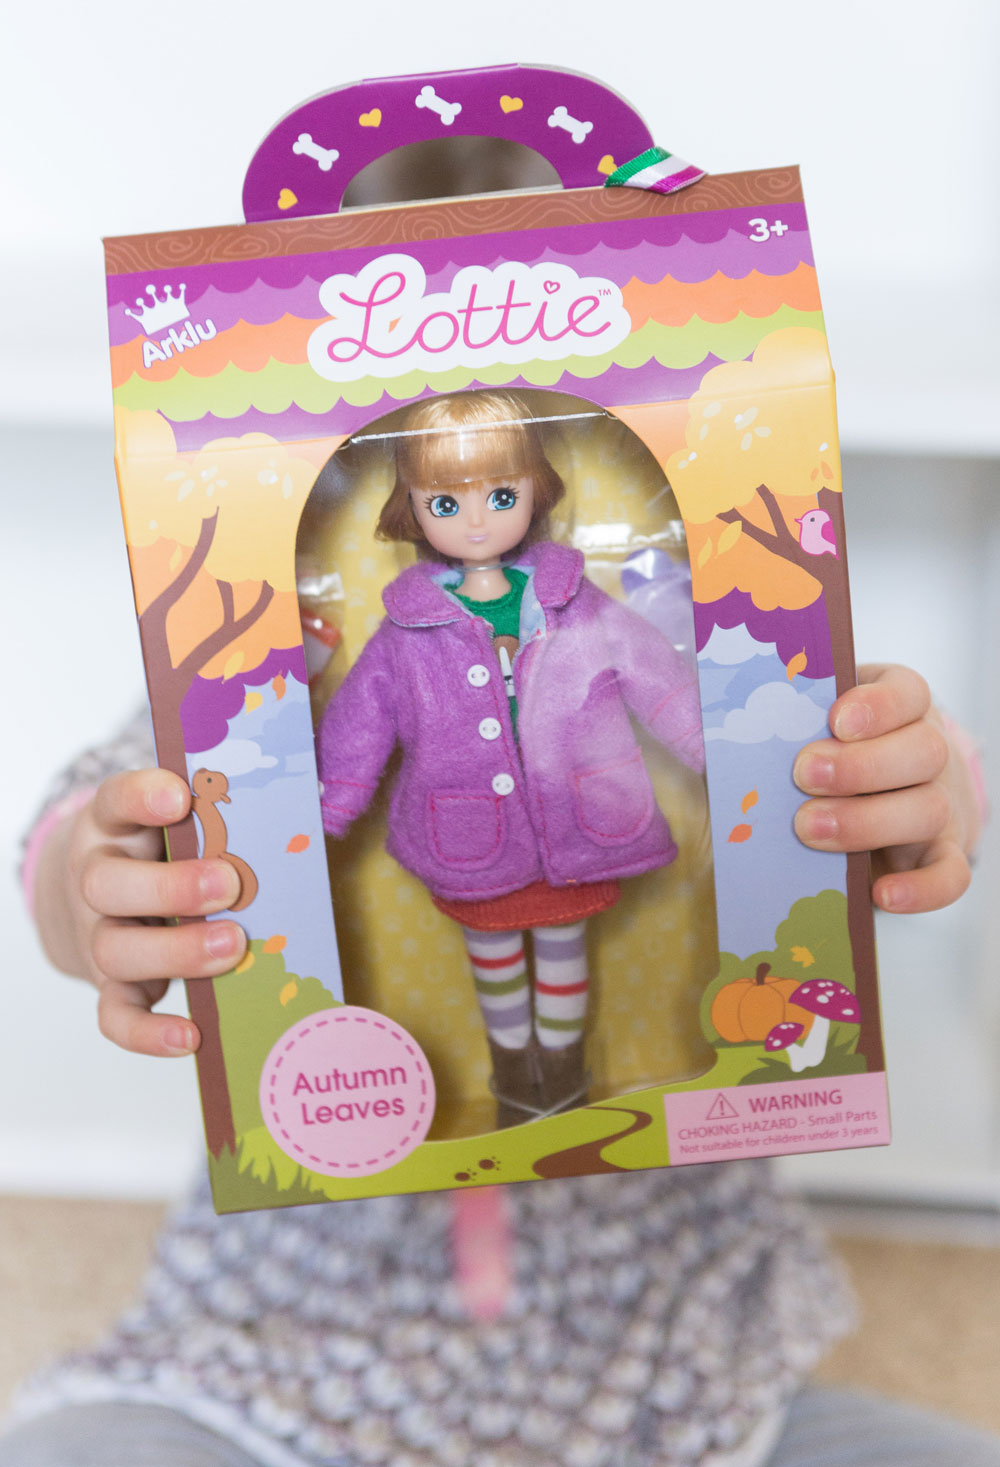 Whimsical Lottie Dolls for imaginative play - Mommy Scene